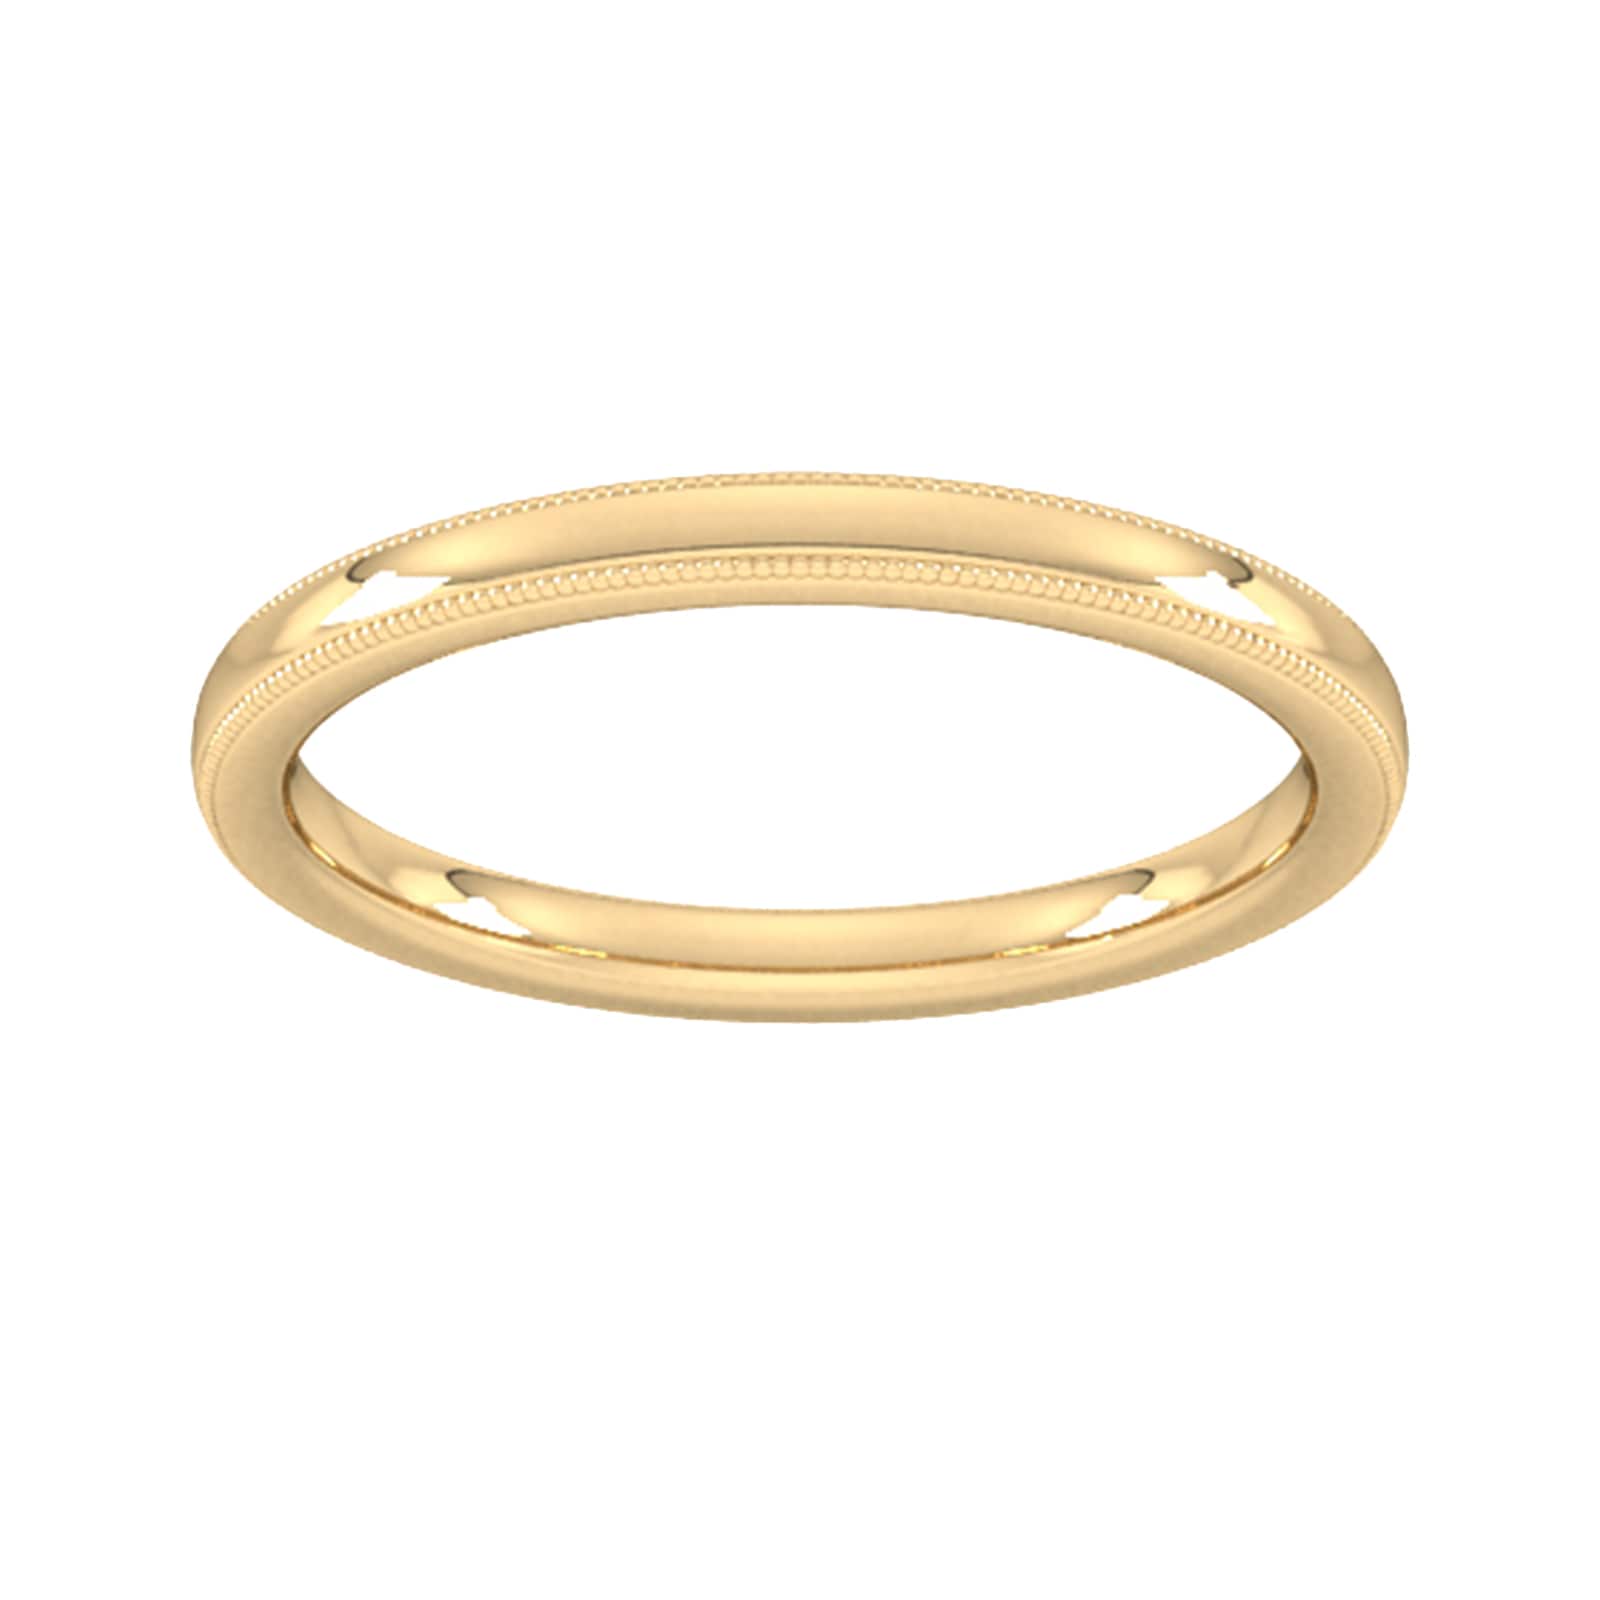 2.5mm D Shape Heavy Milgrain Edge Wedding Ring In 18 Carat Yellow Gold - Ring Size K